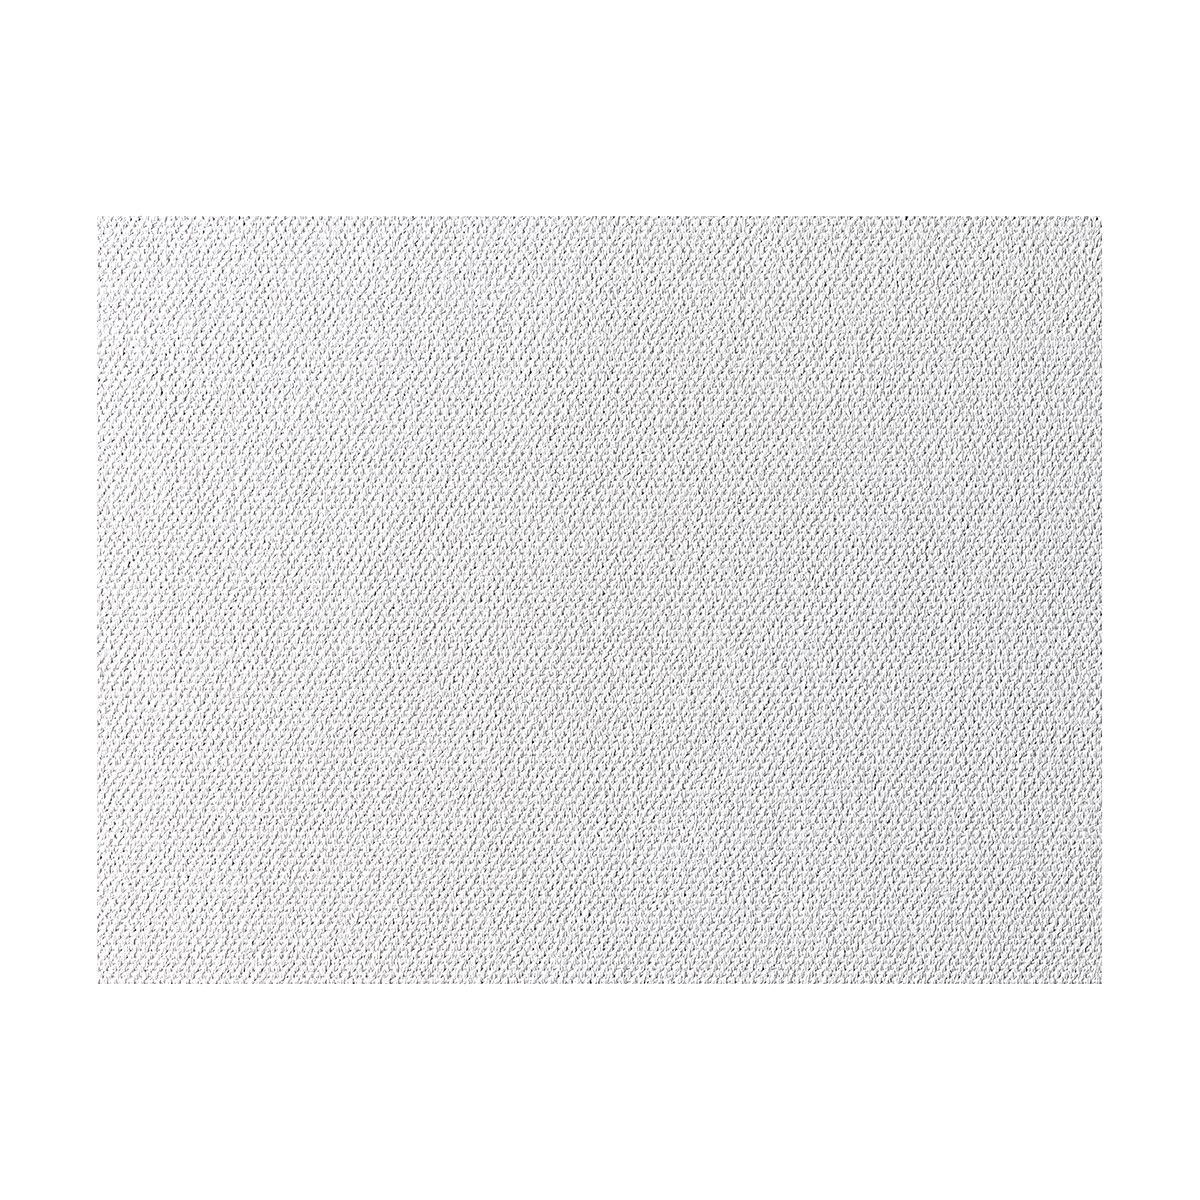 FREDRIX WHITE REAL CANVAS PAD 10 SHEETS12x16 3501